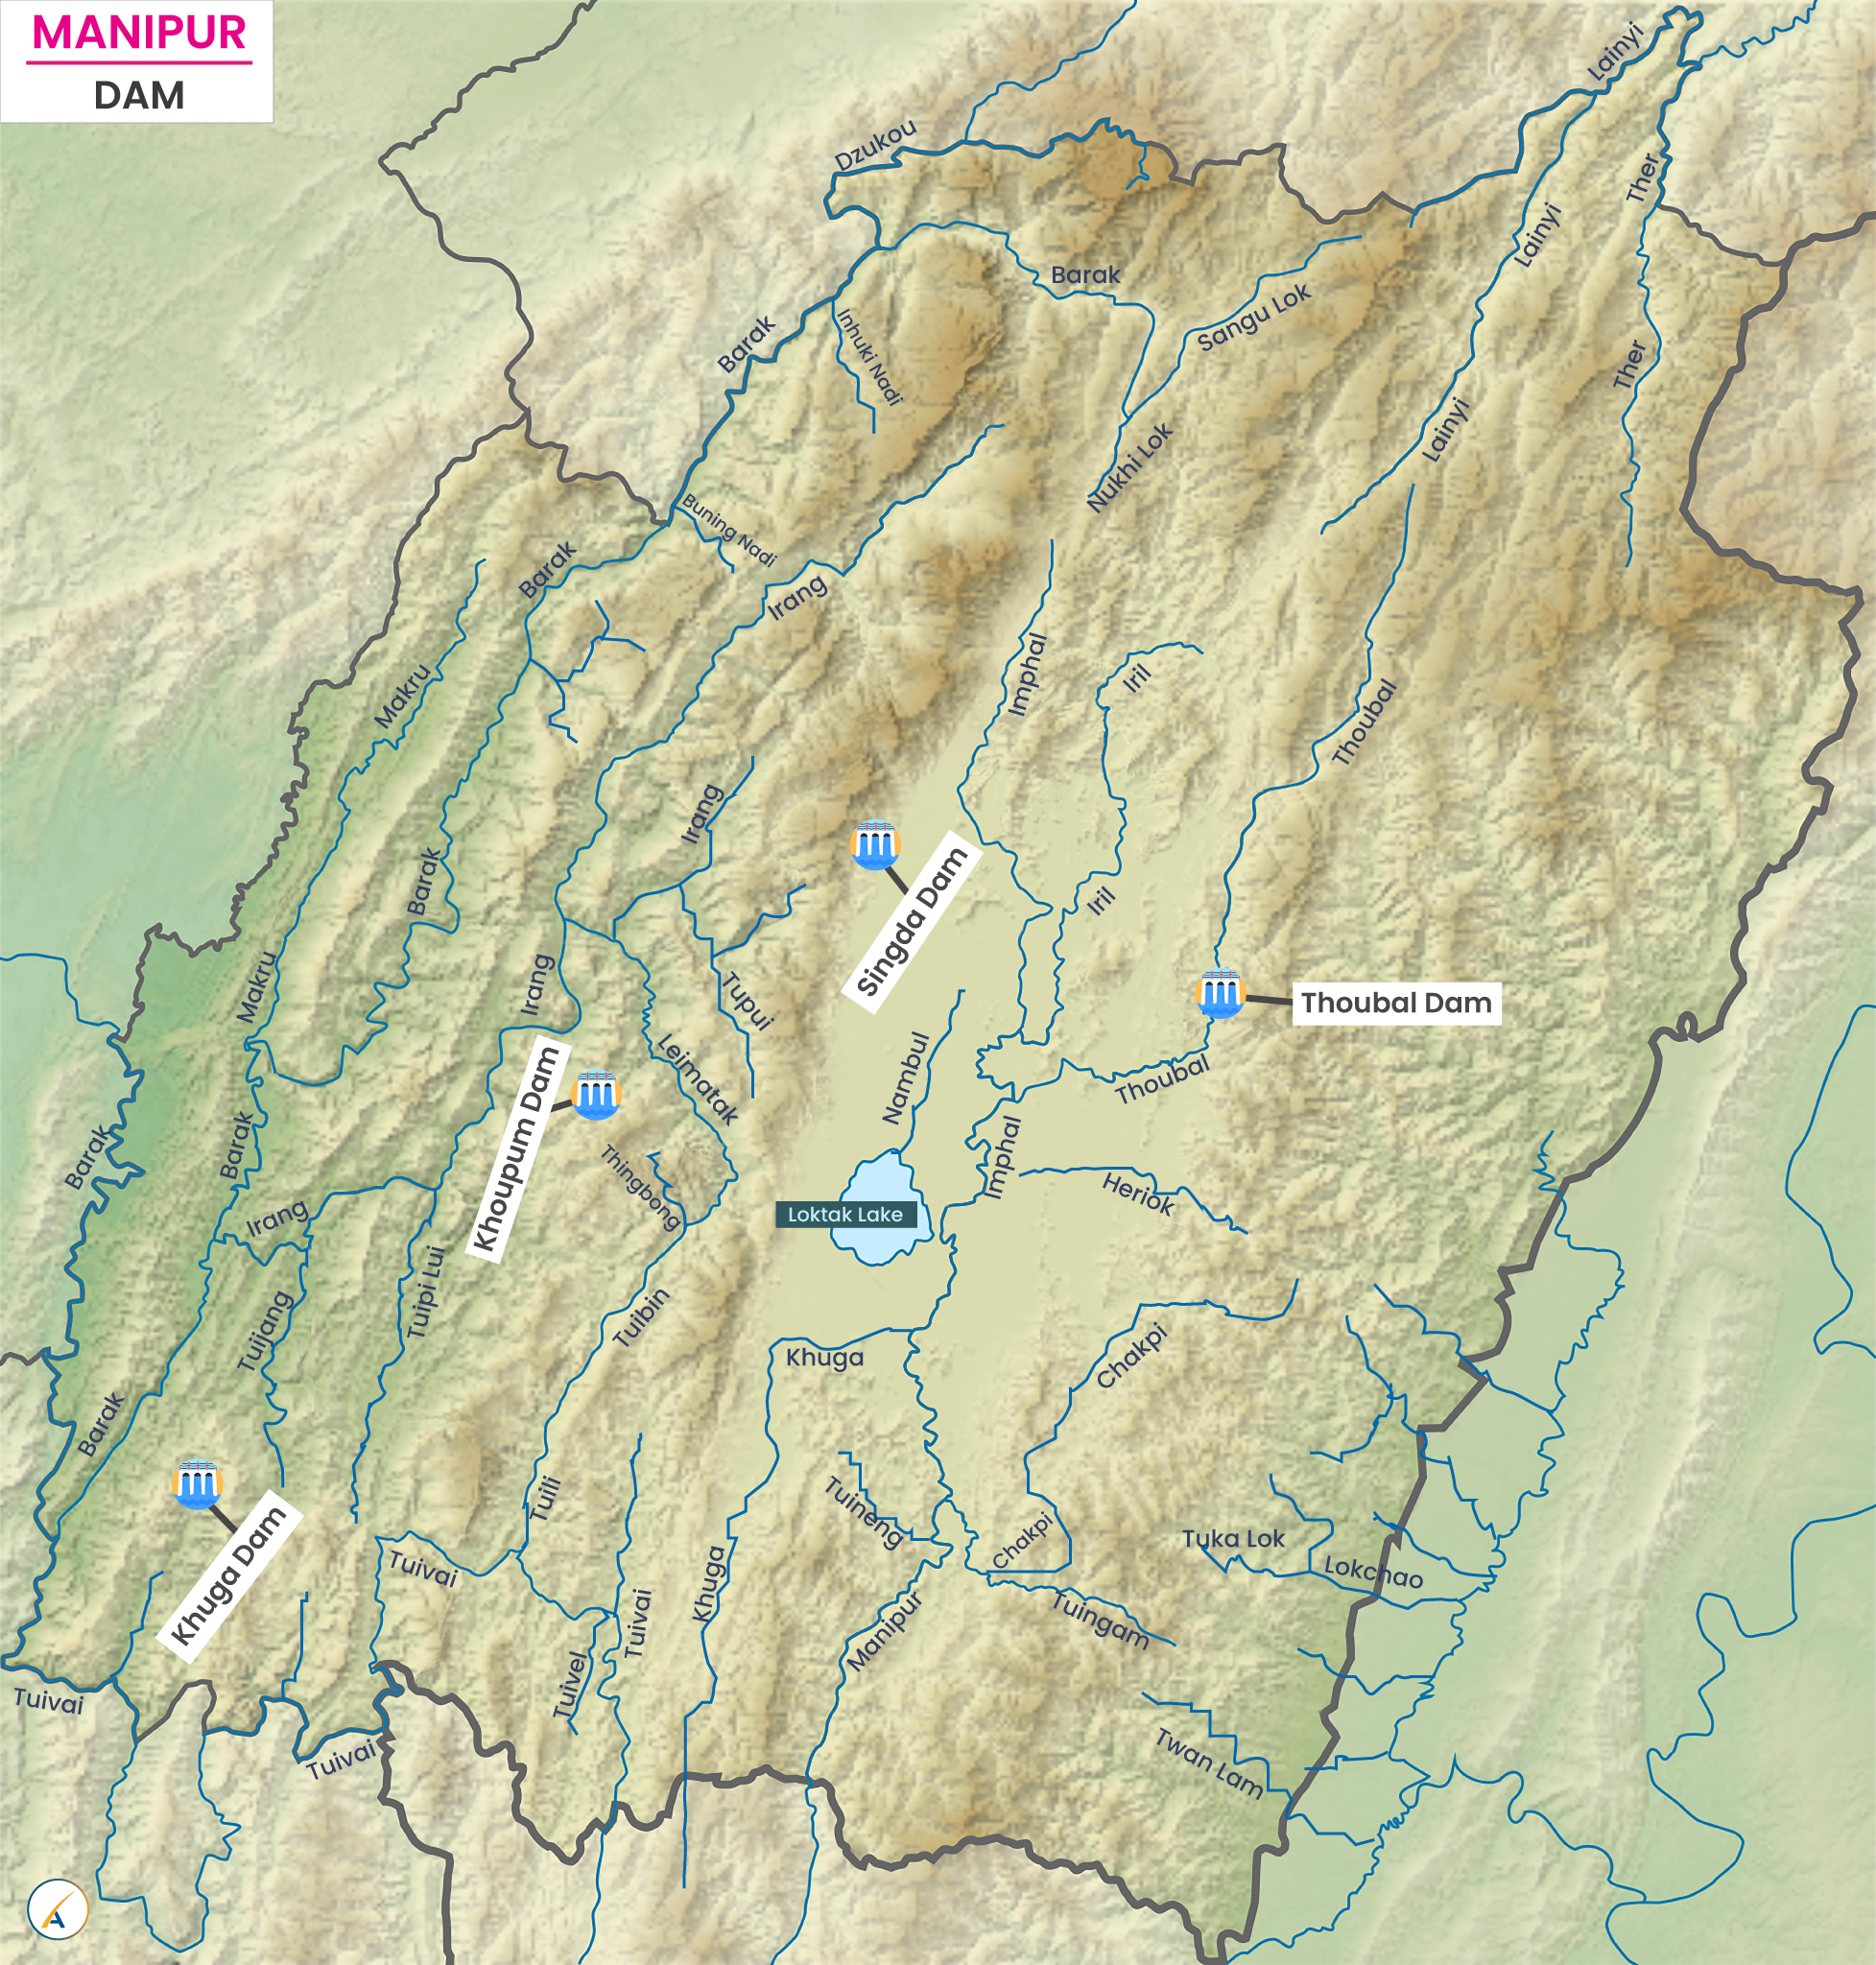 Major Dams in Manipur (Map)